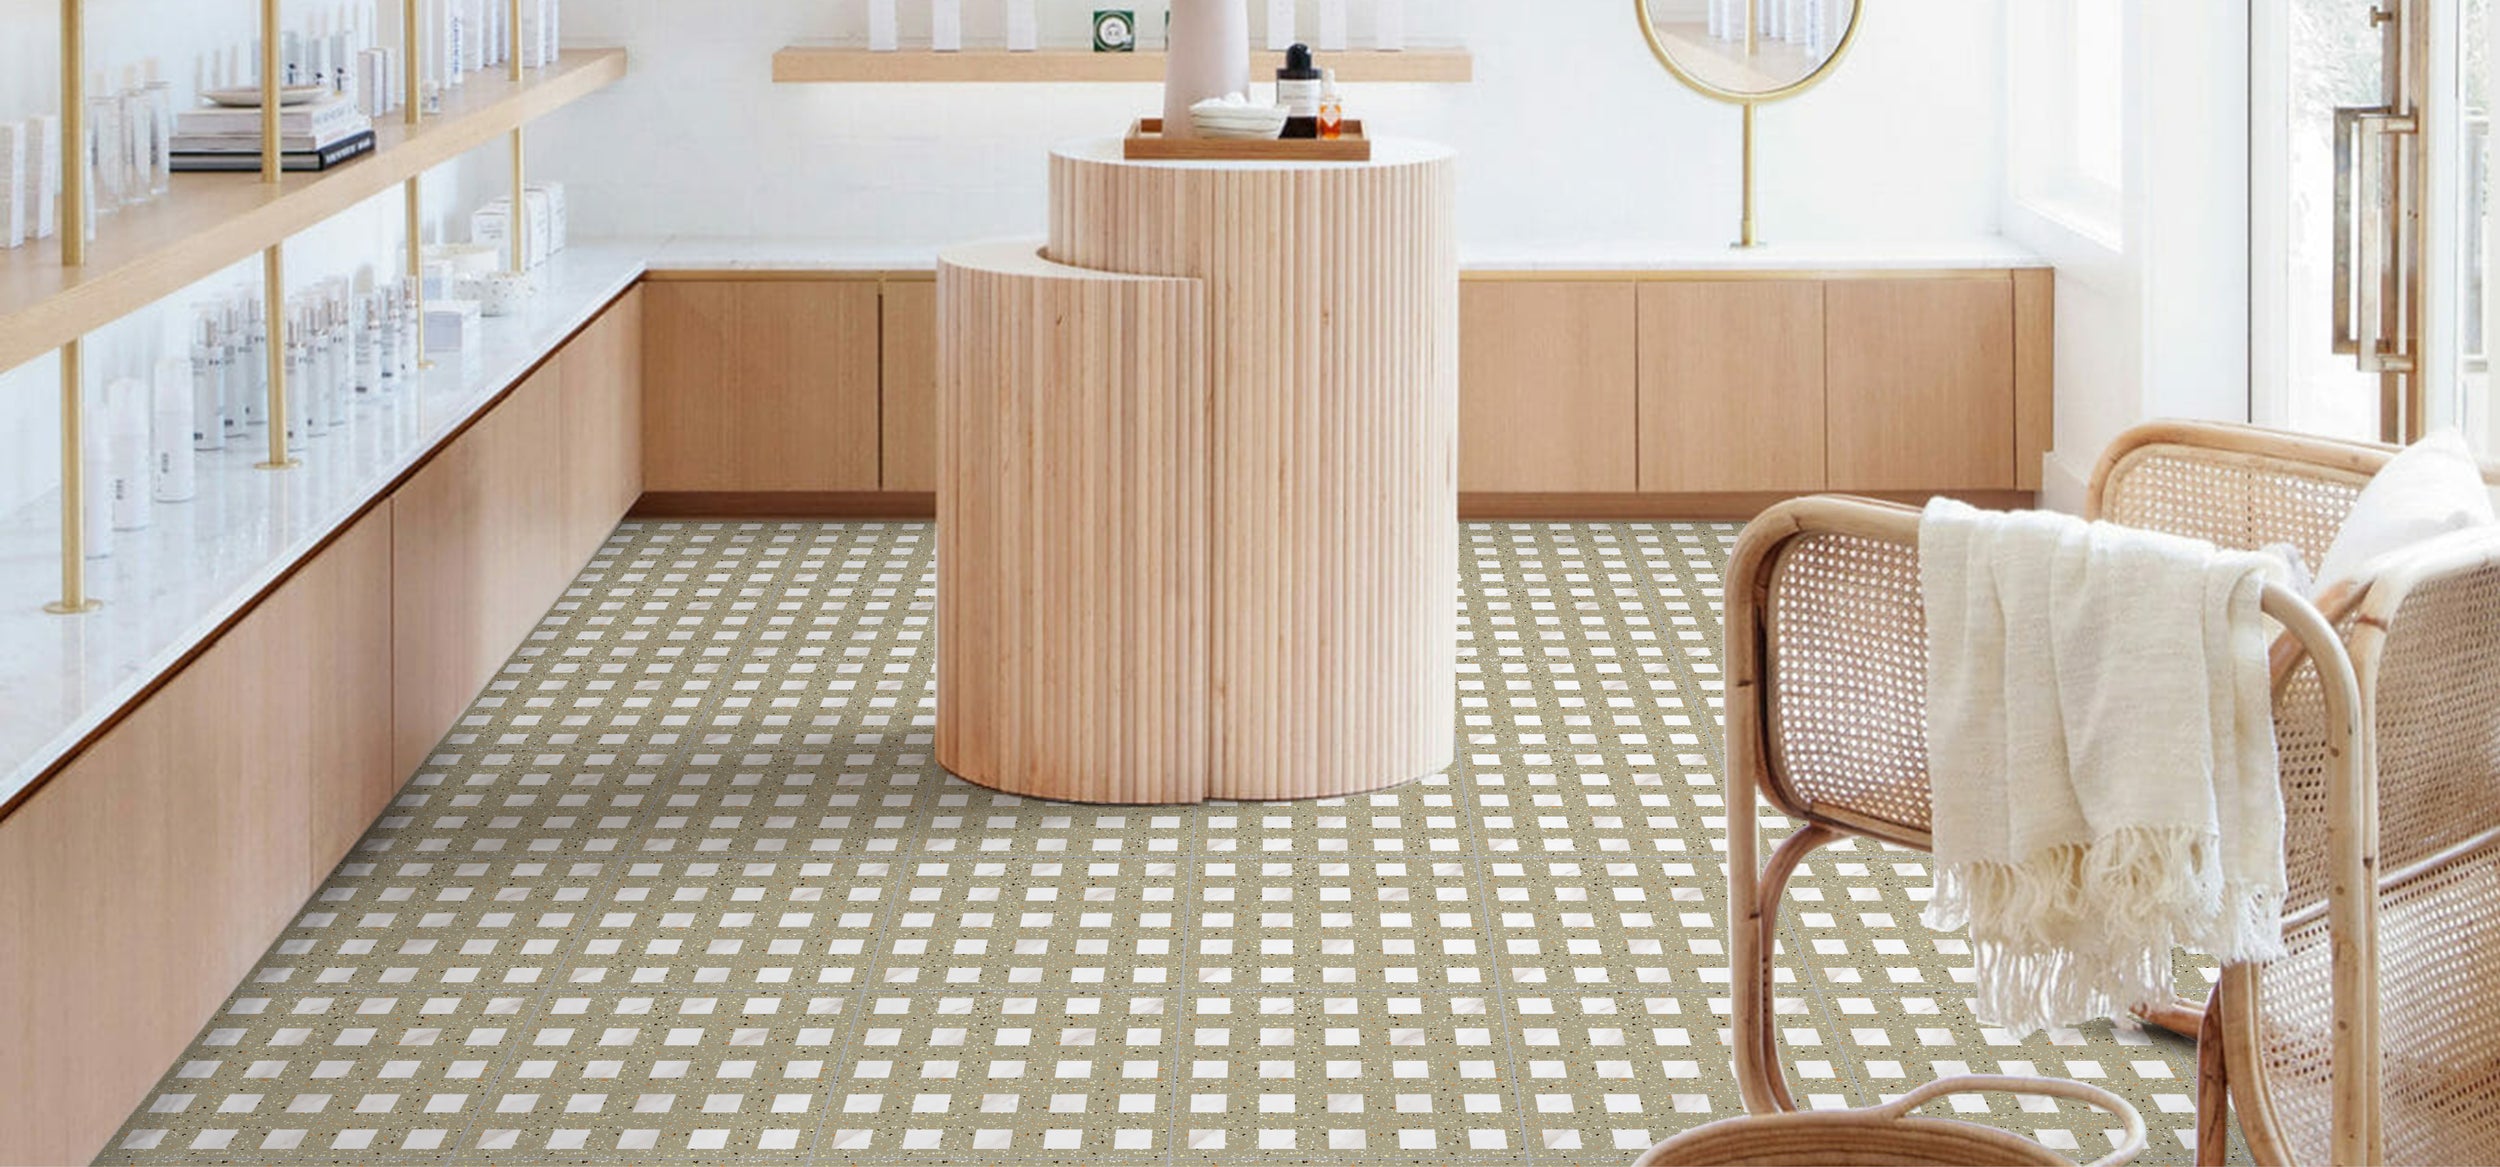 300x300mm Tiles - Living Style